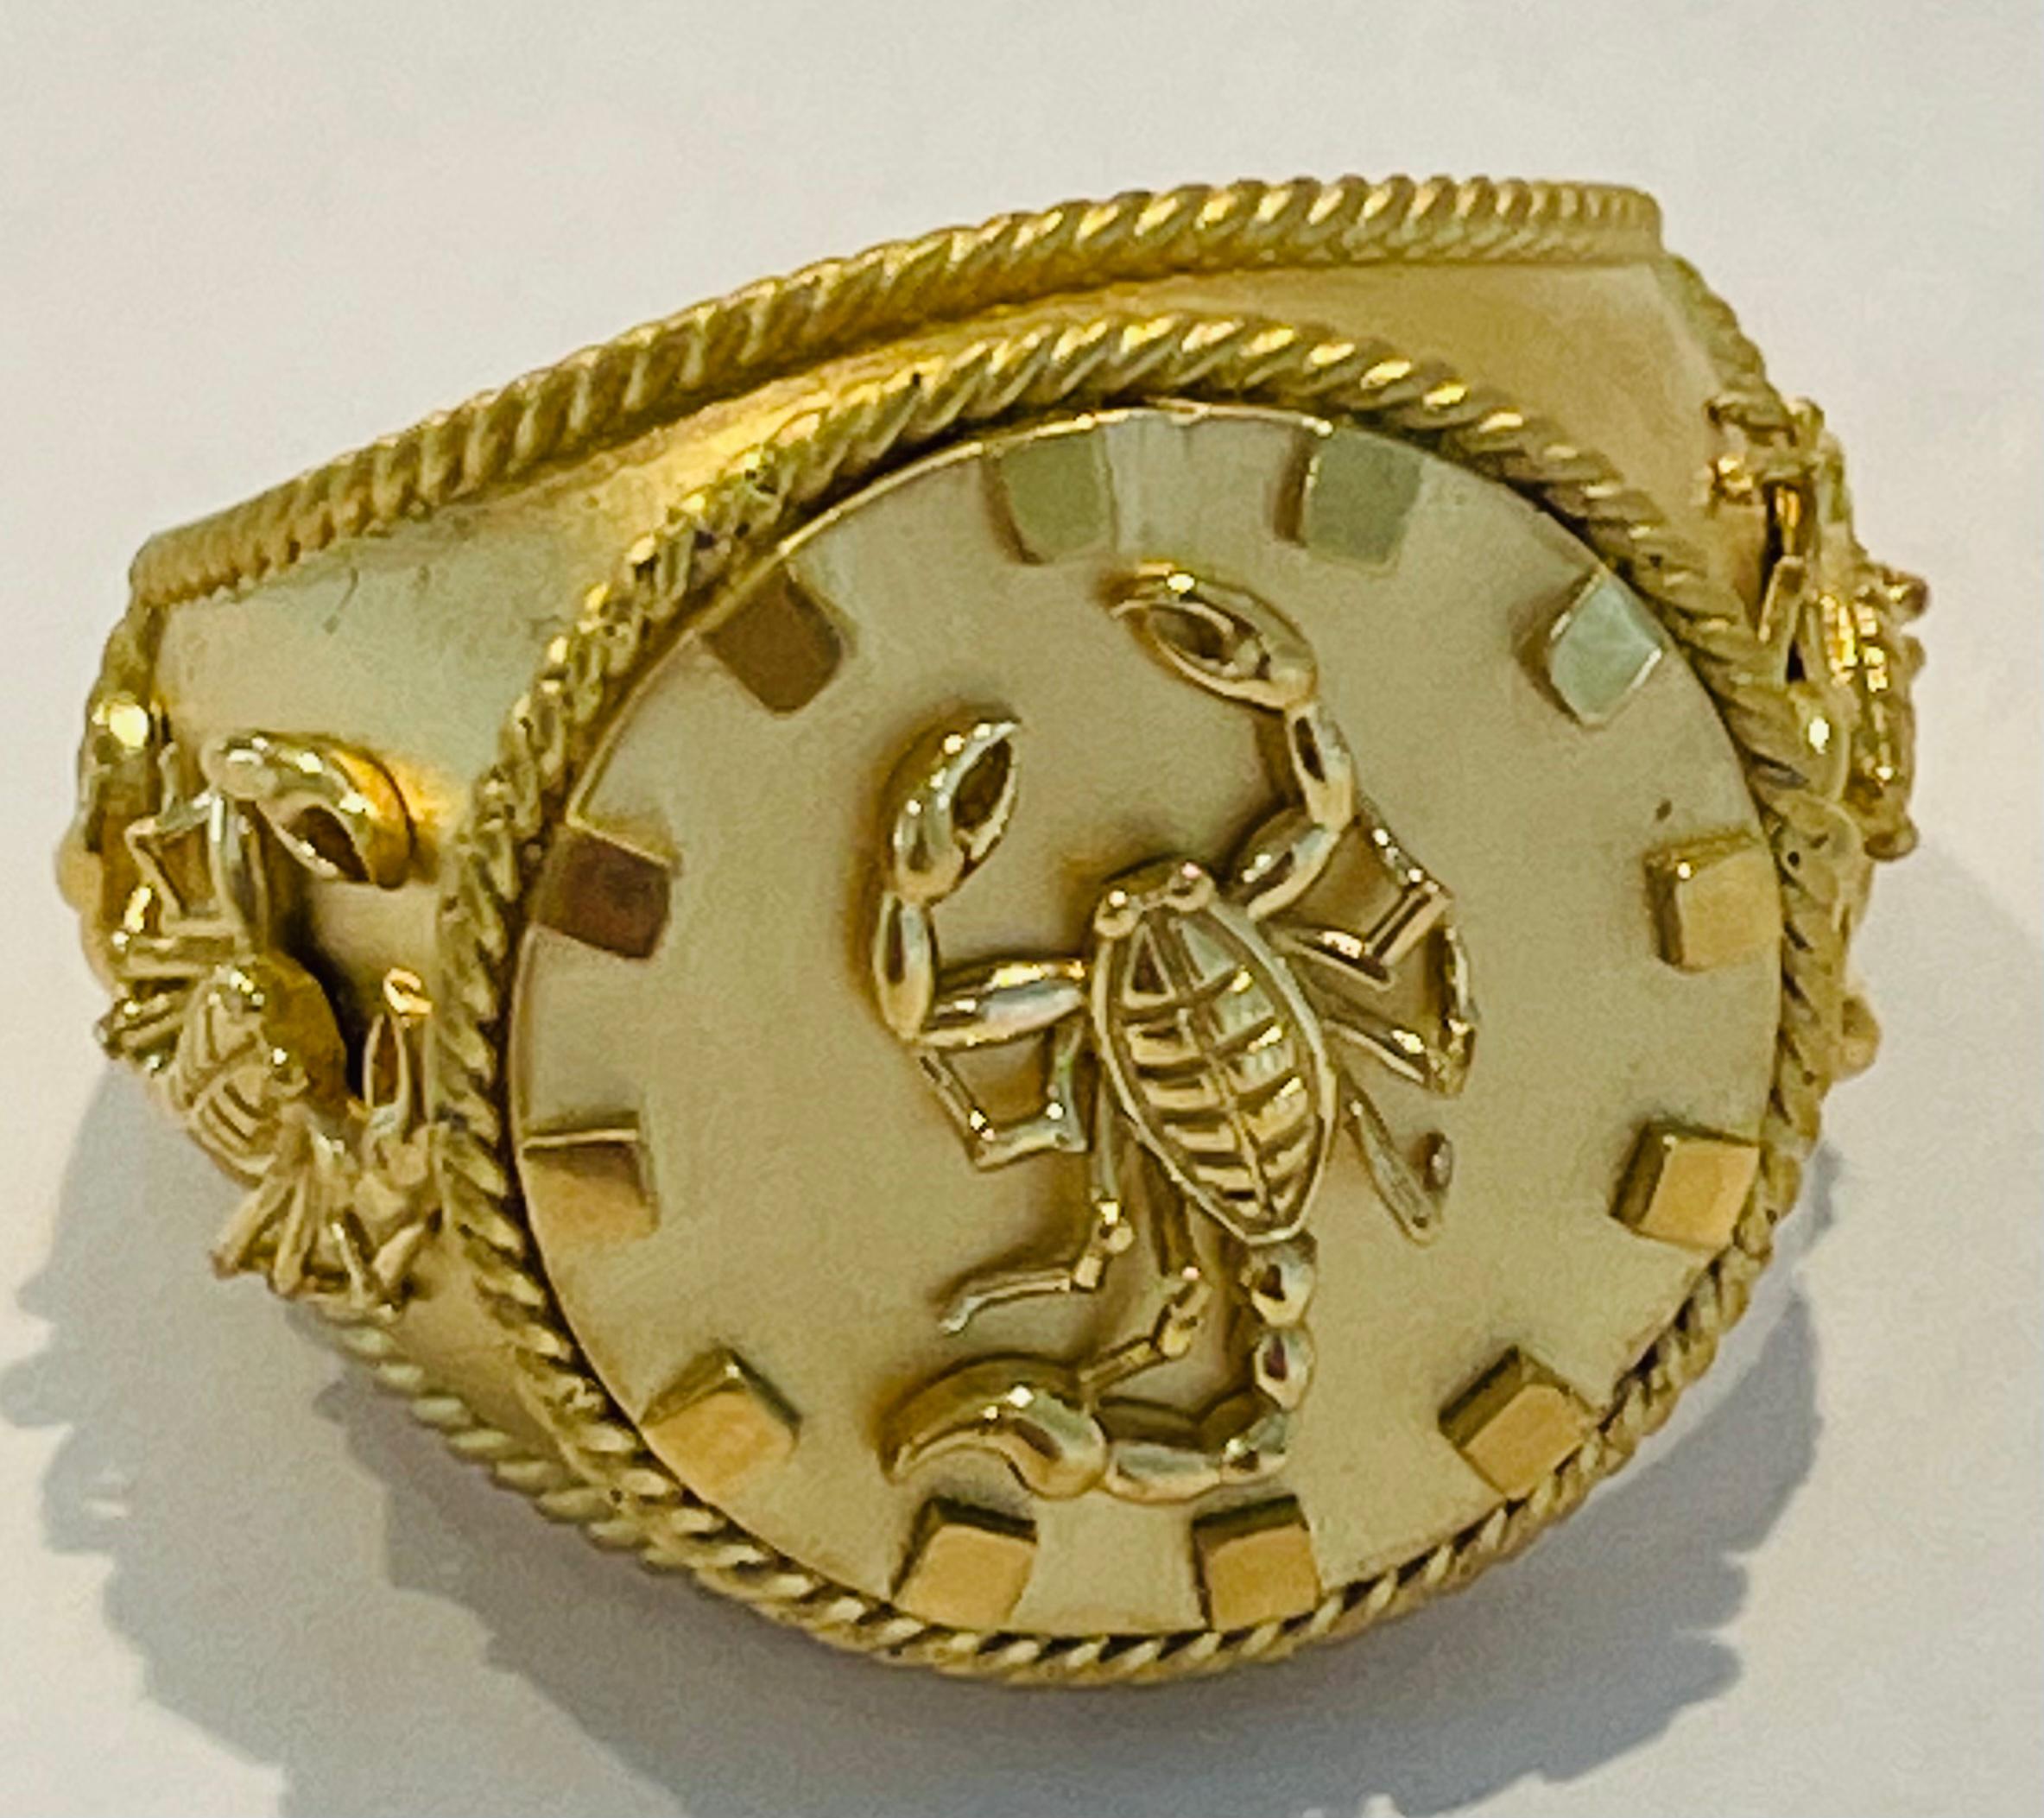 Women's or Men's Zodiac Scorpion Ring in 18k Gold by Tagili For Sale